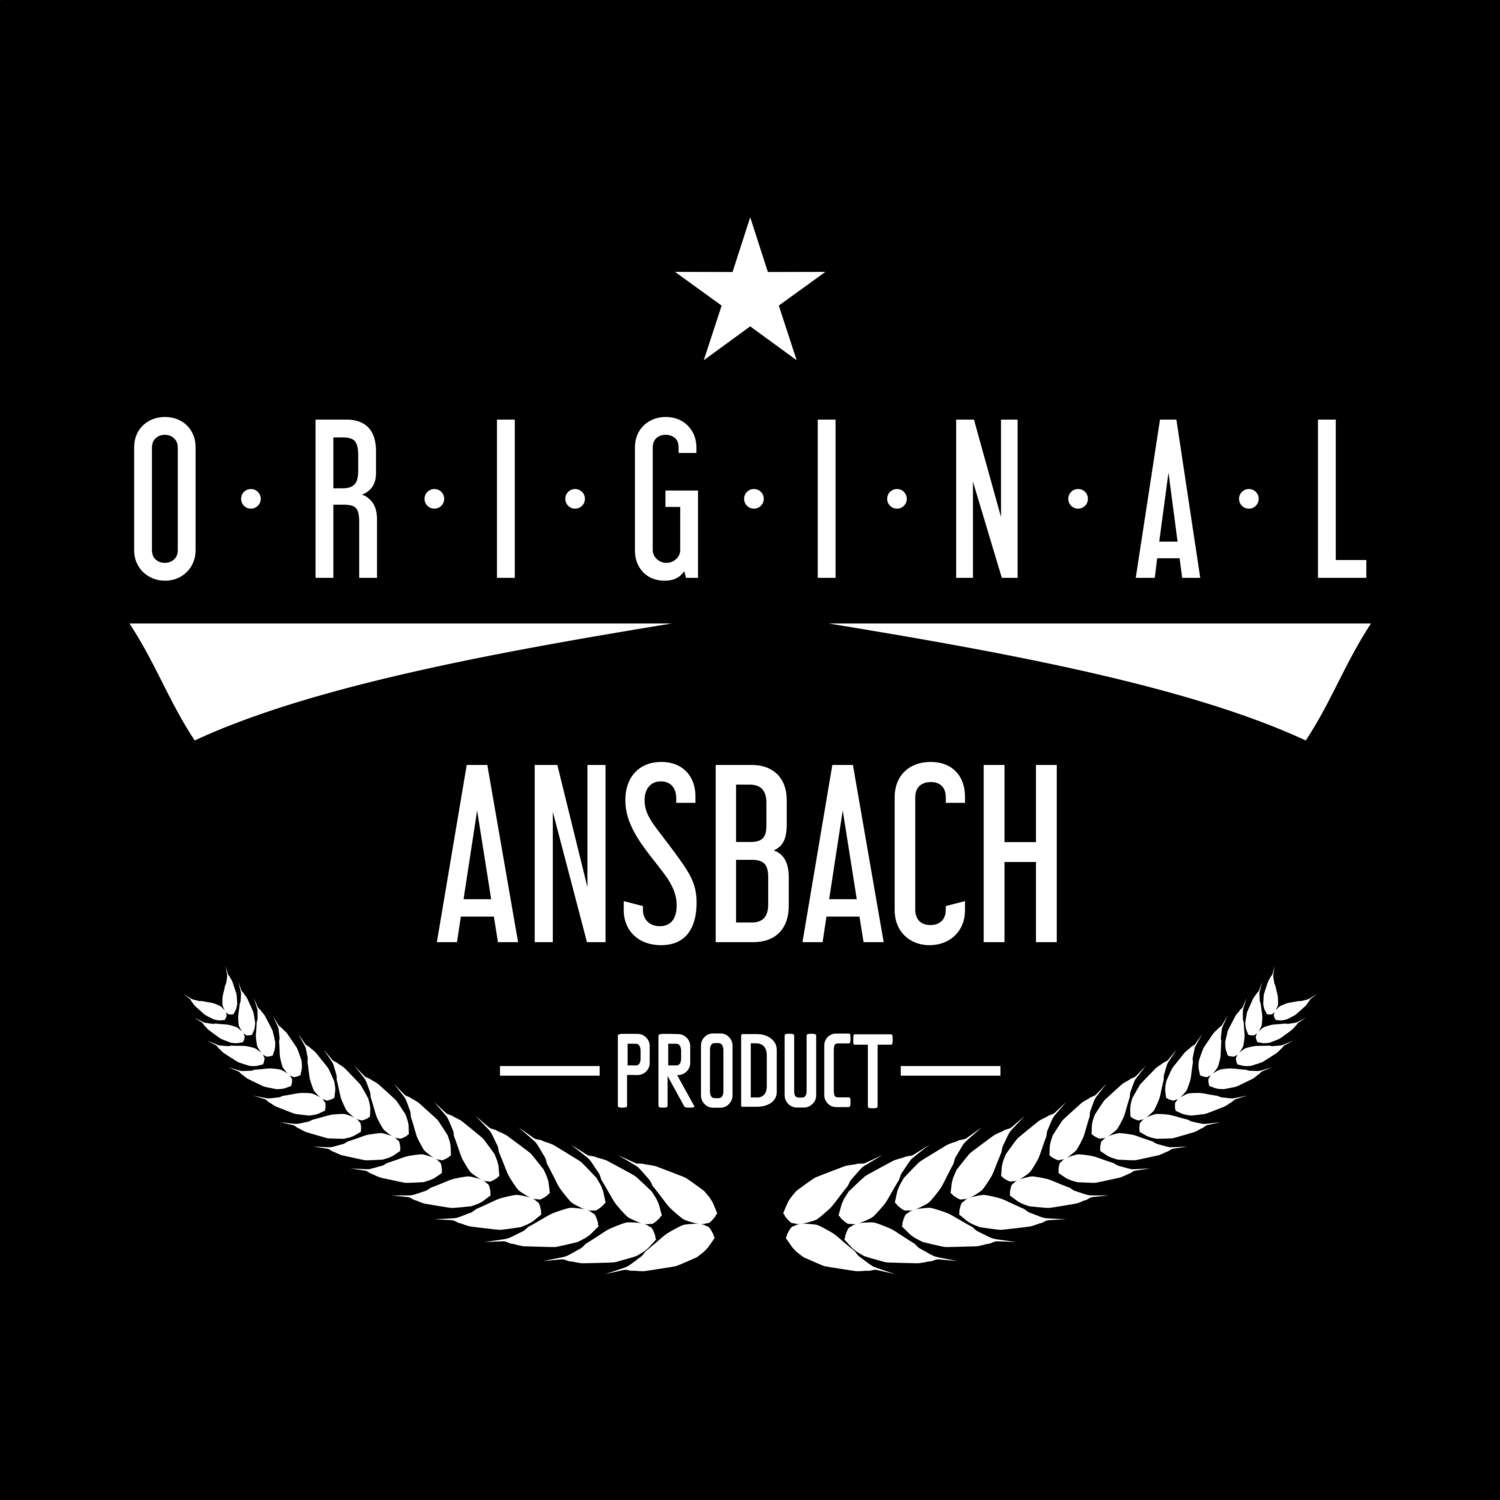 Ansbach T-Shirt »Original Product«